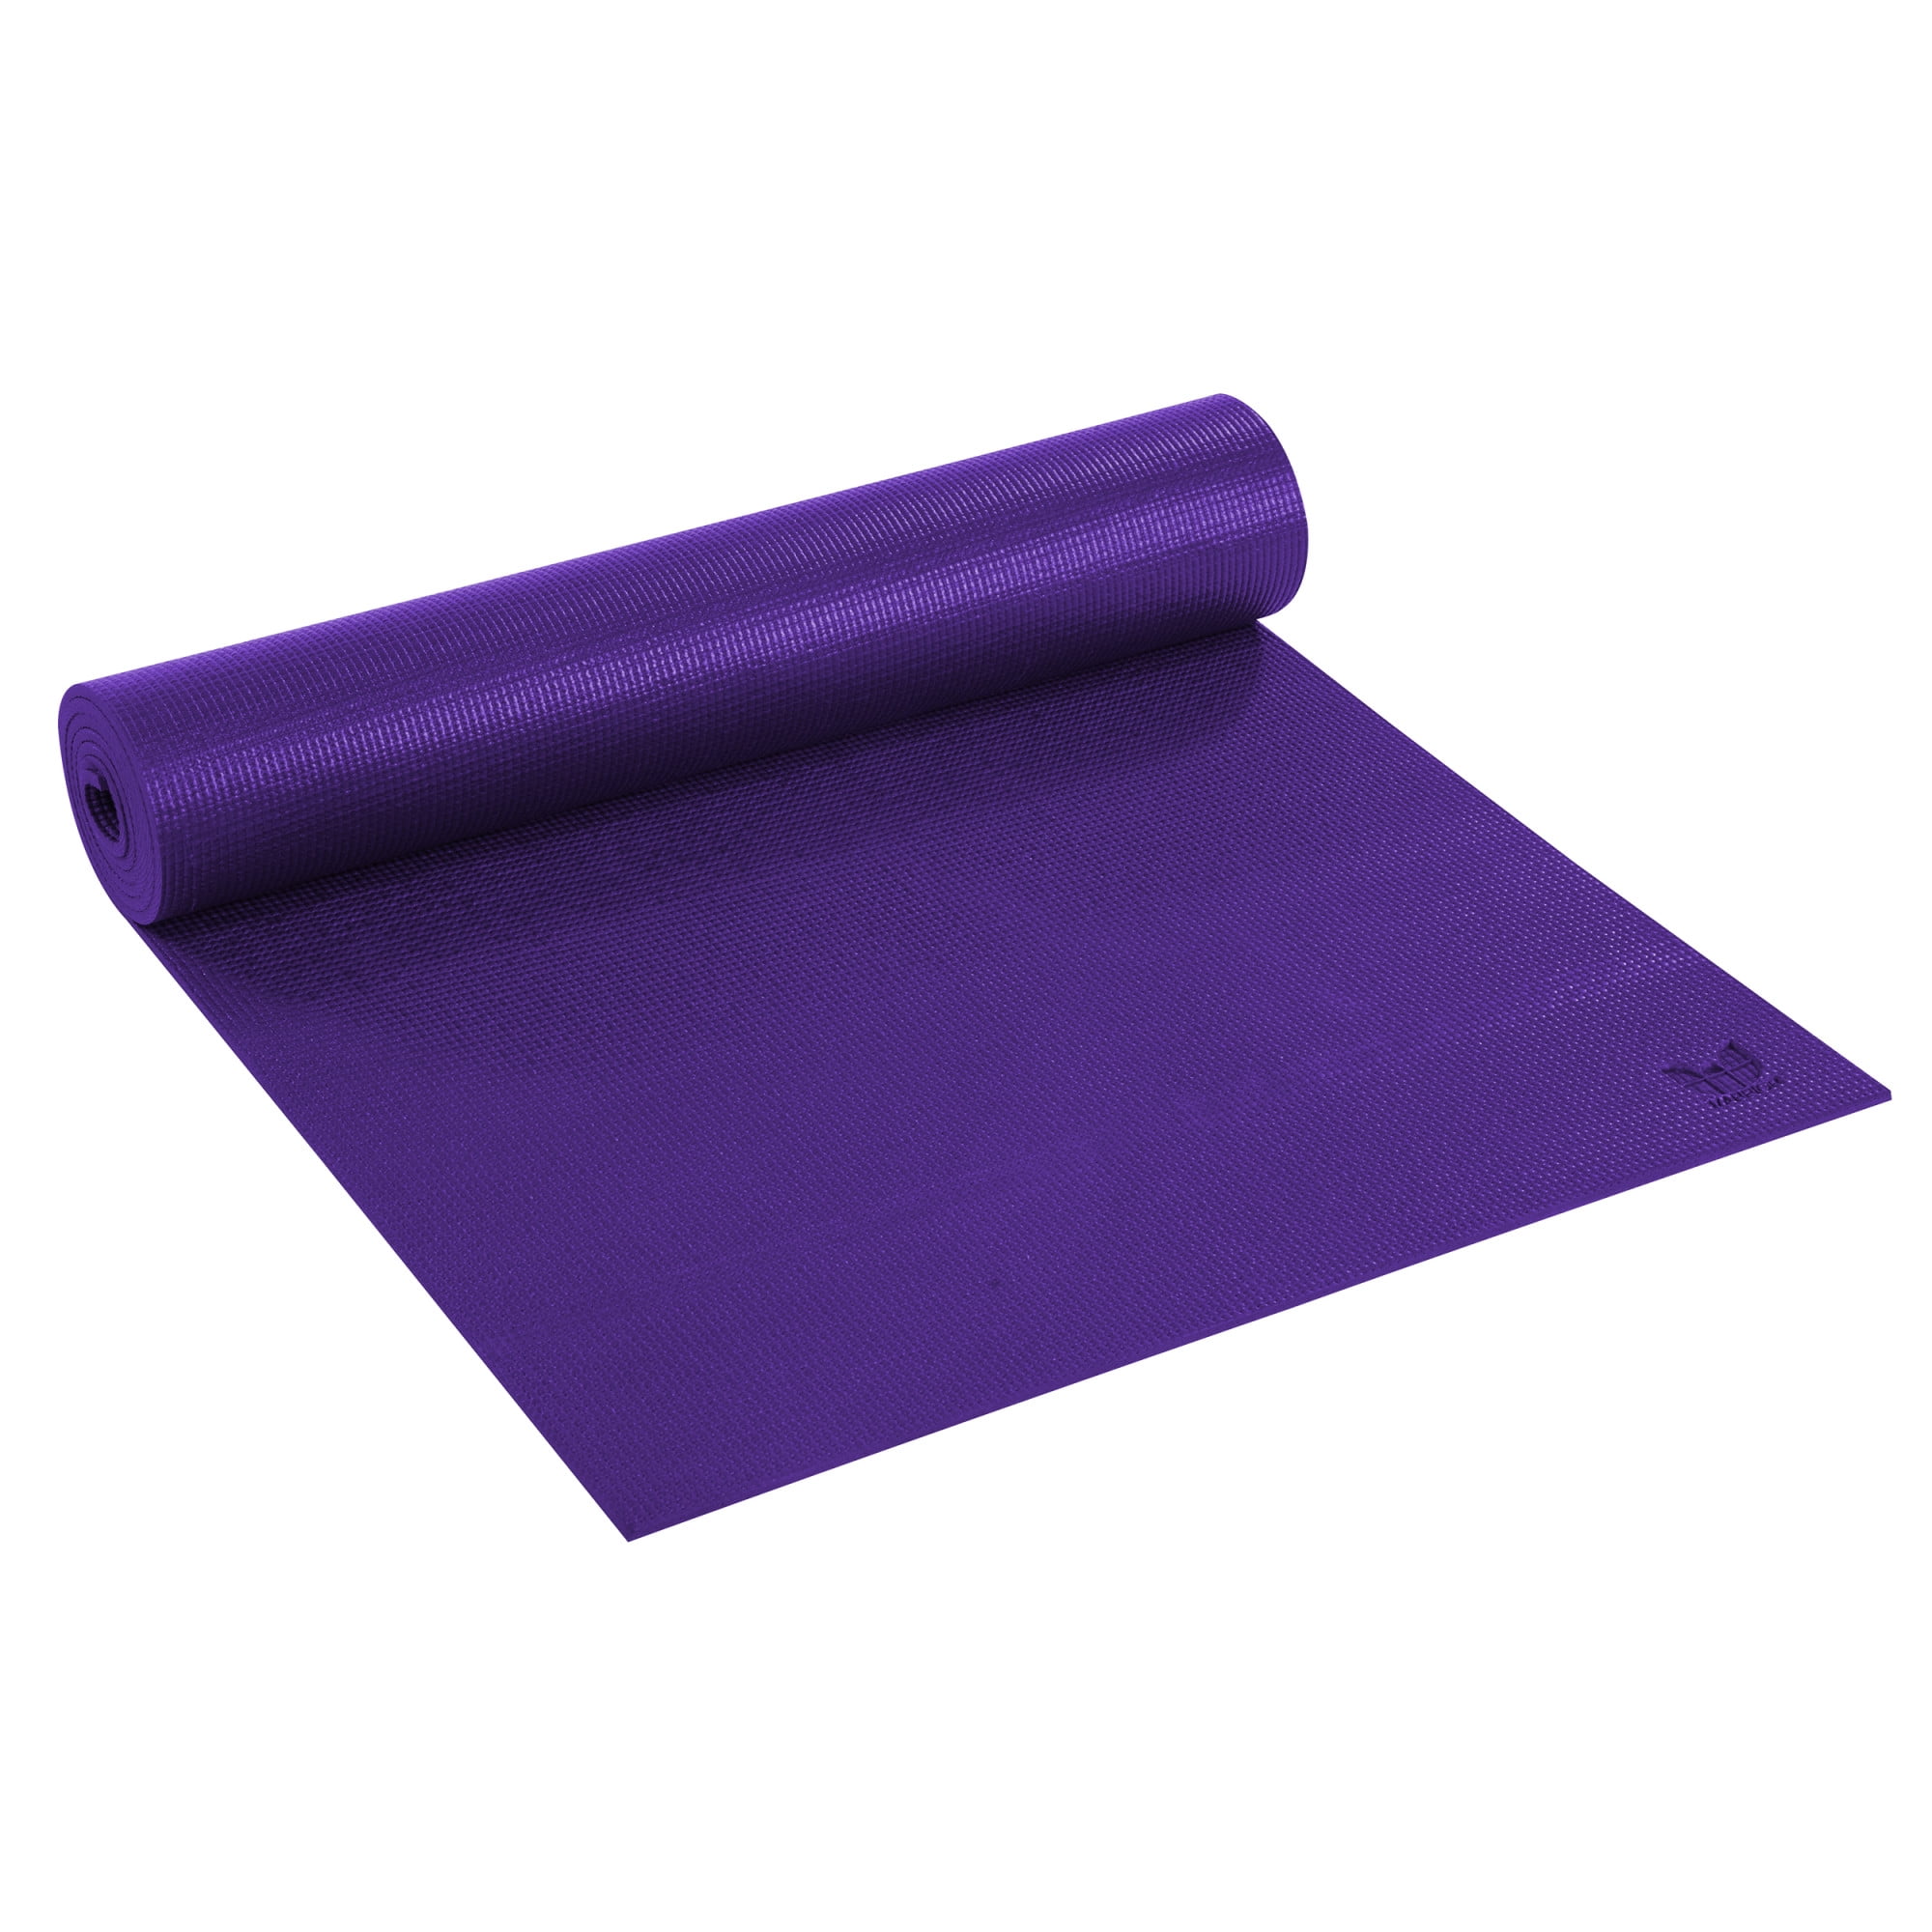 Warrior Yoga Mat - Purple - 3mm x 24